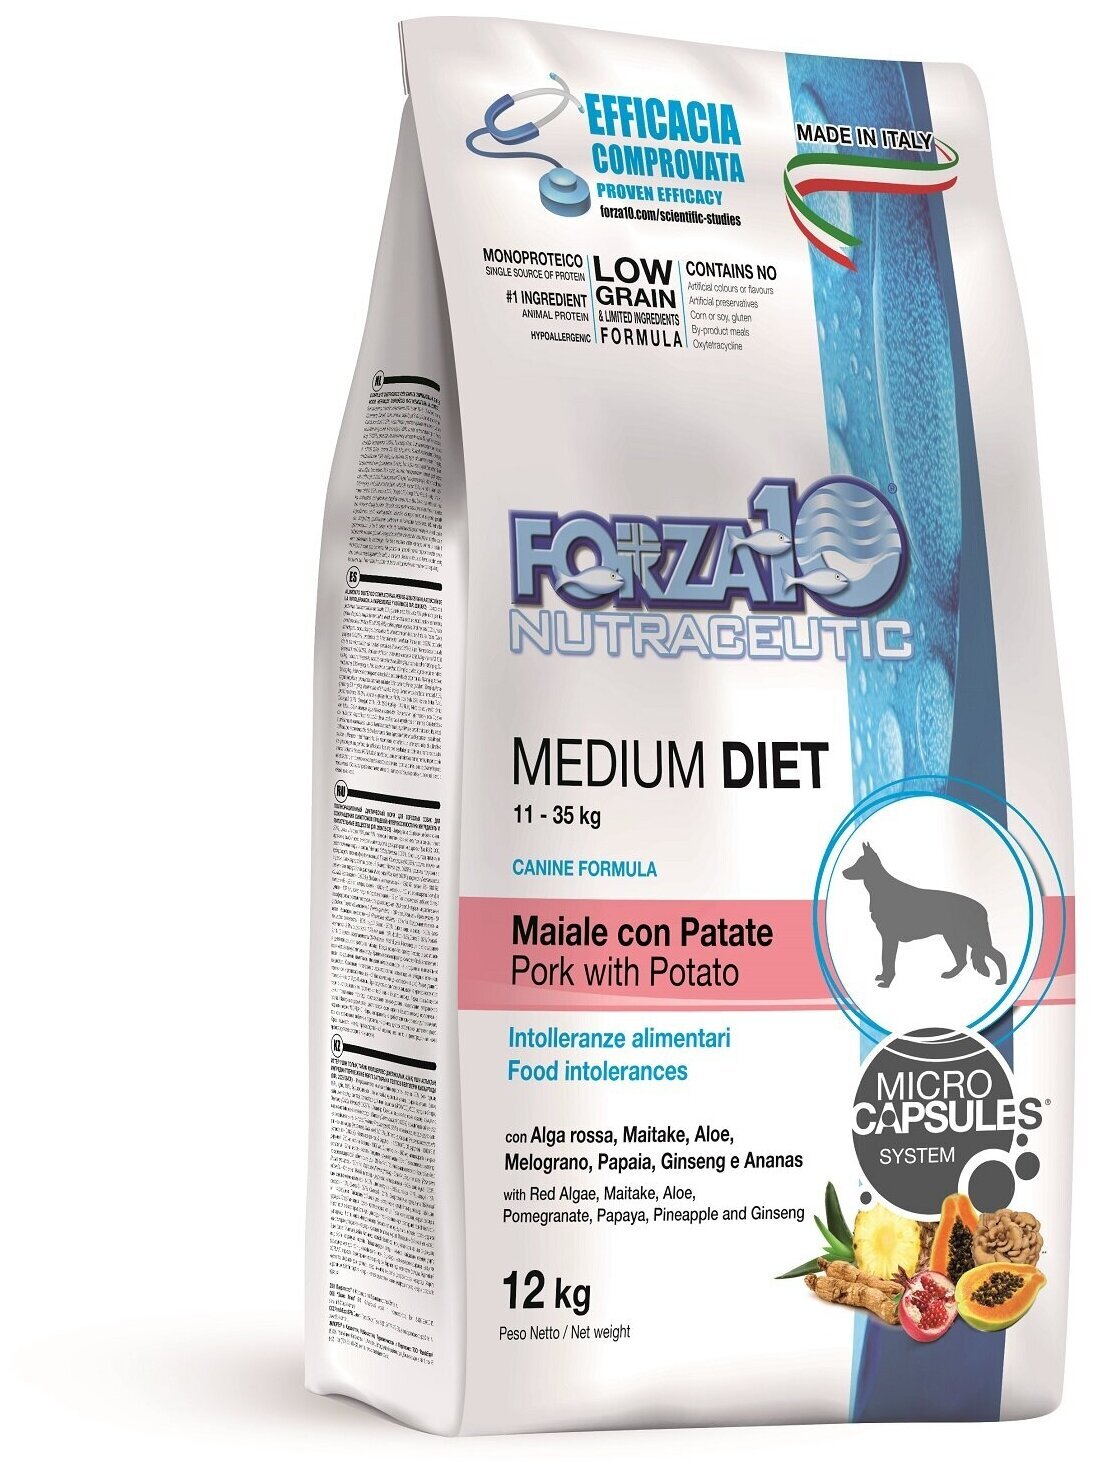 Forza 10 корм для собак. Forza10 корм для собак с ягненком. Корма Форза 10 для собак. Forza10 Medium Diet для собак рыба.